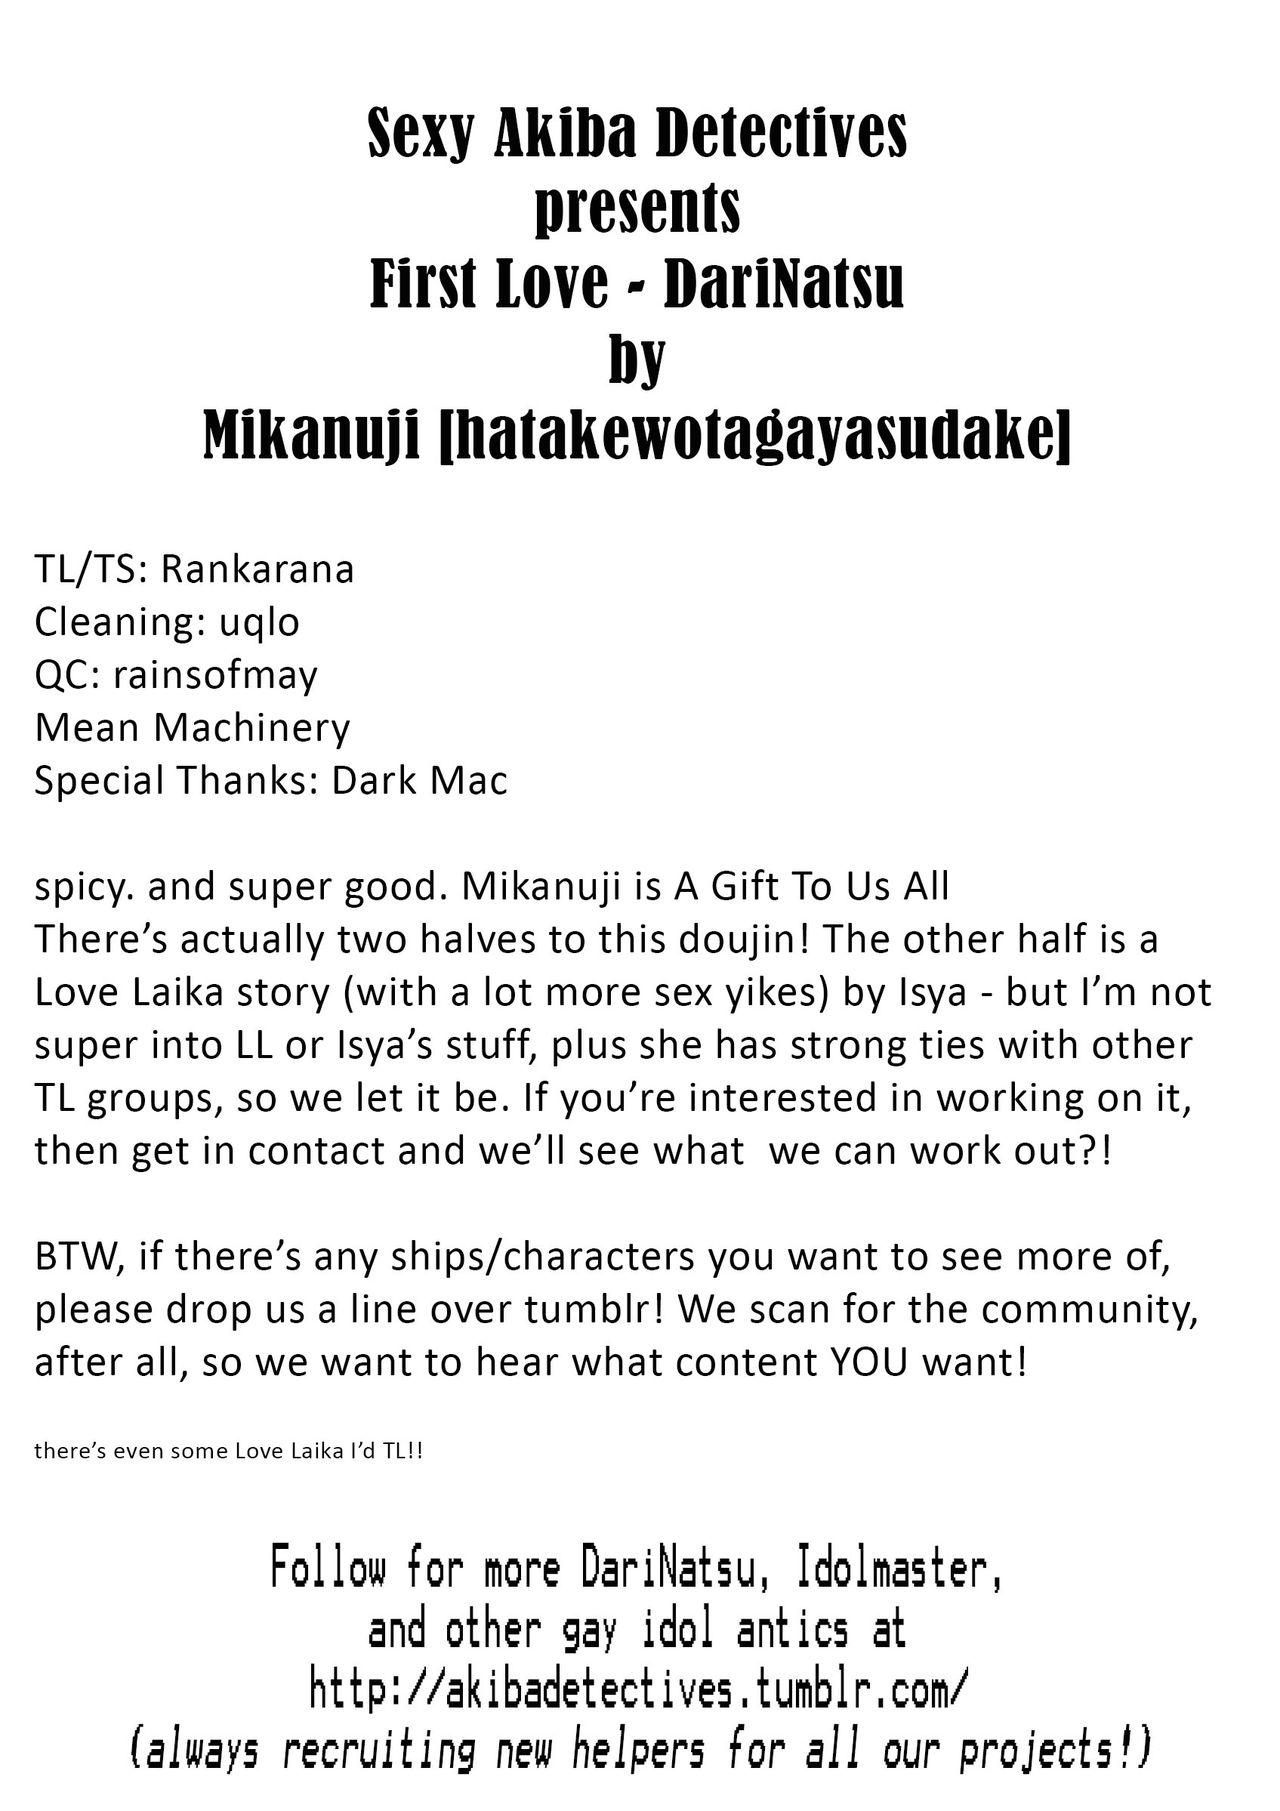 First Love - DariNatsu [mikanuji] [English] [Sexy Akiba Detectives] [The Idolmaster: Cinderella girls]] 25